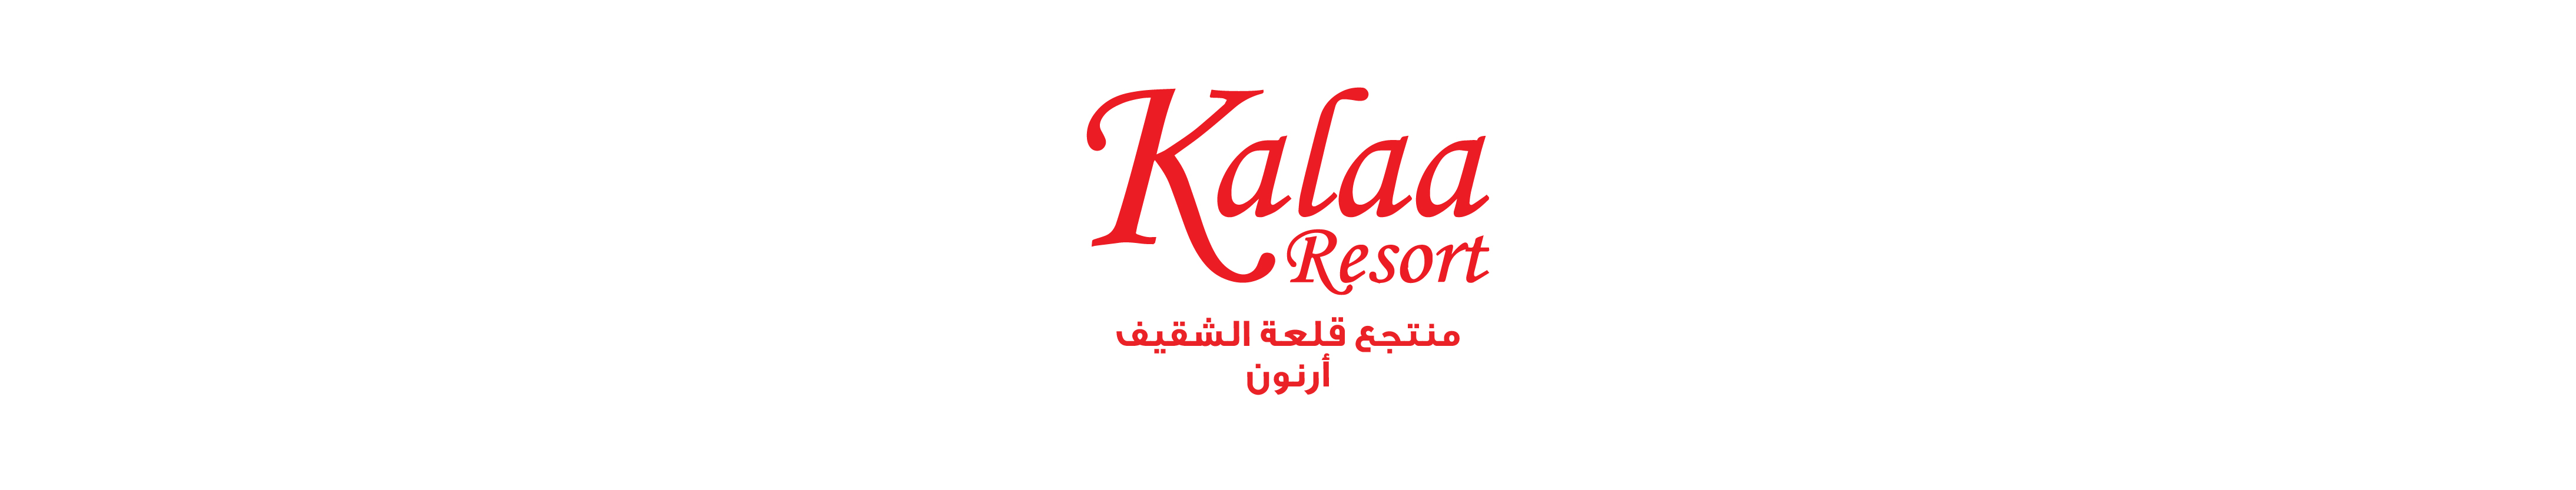 Kalaa Resorts